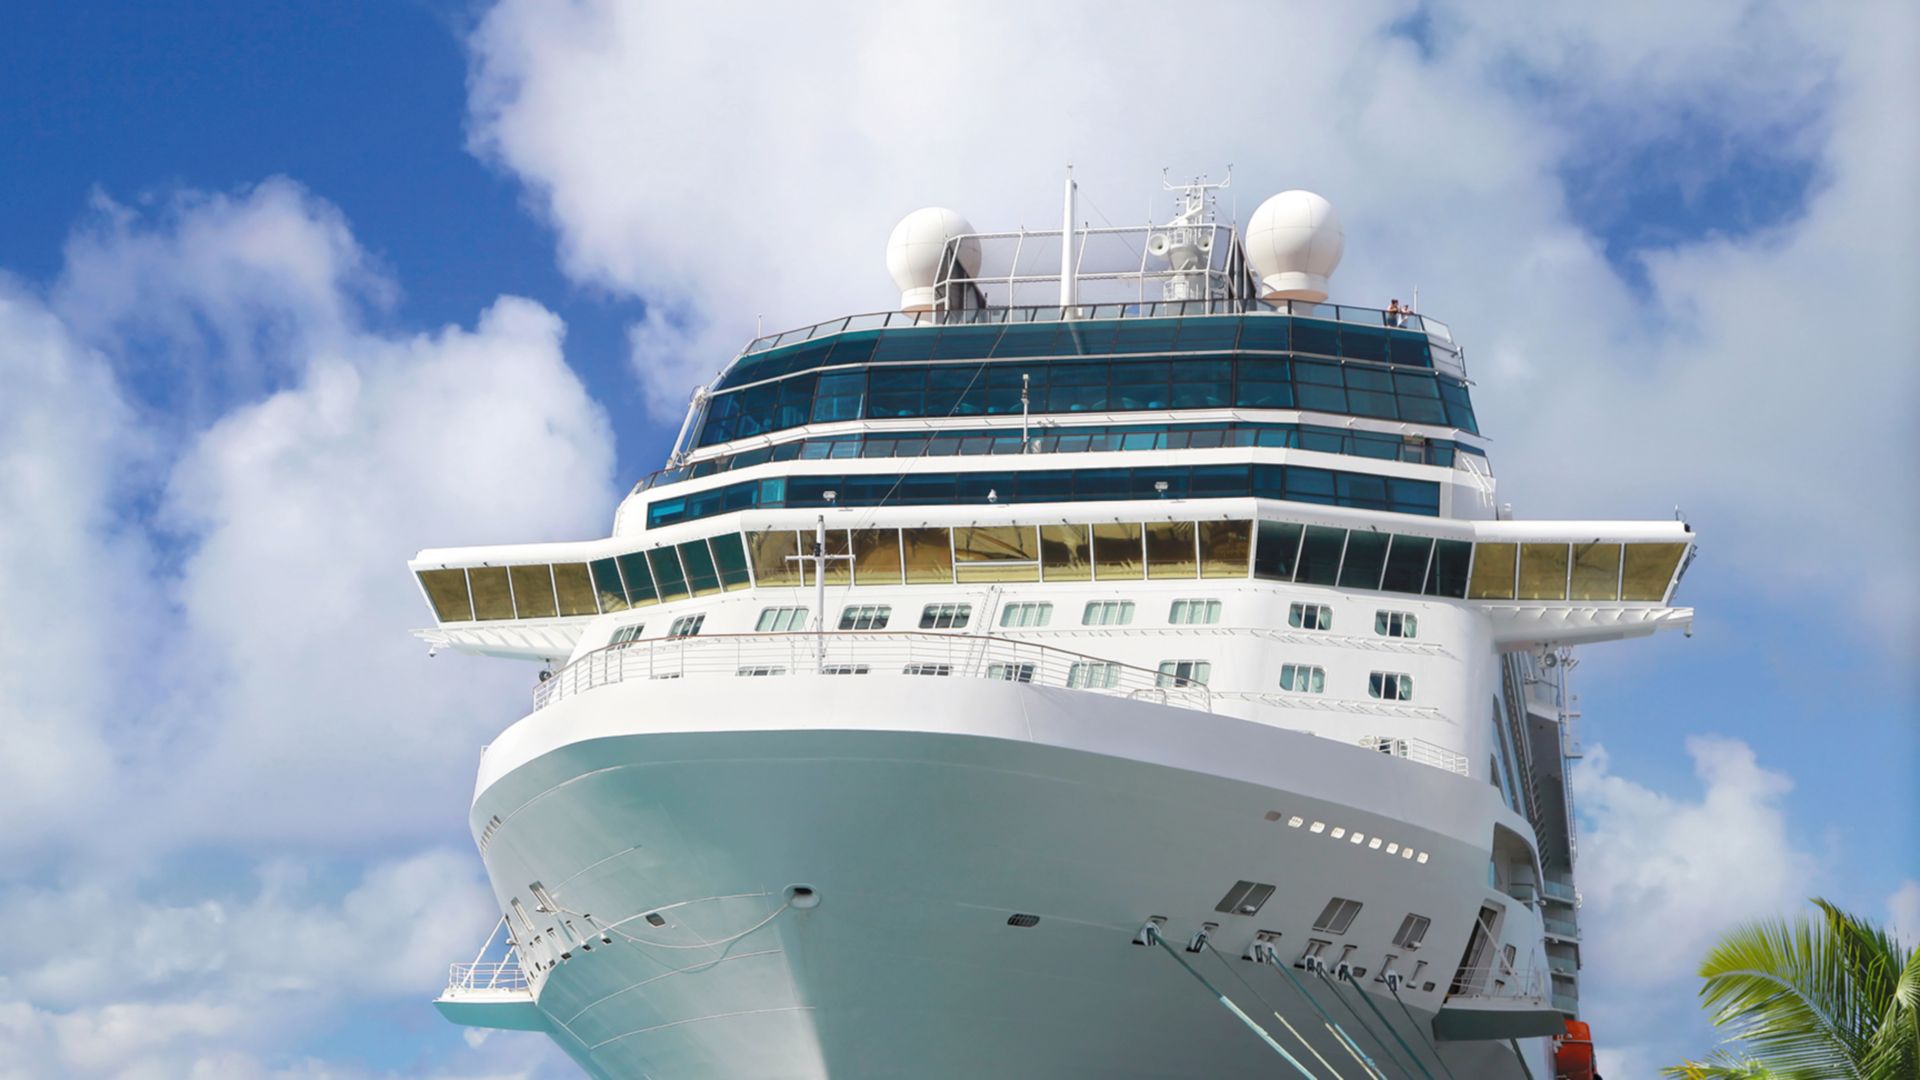 Luxury Cruise Ship in Port; Shutterstock ID 285815588; PO: Marine Brochure